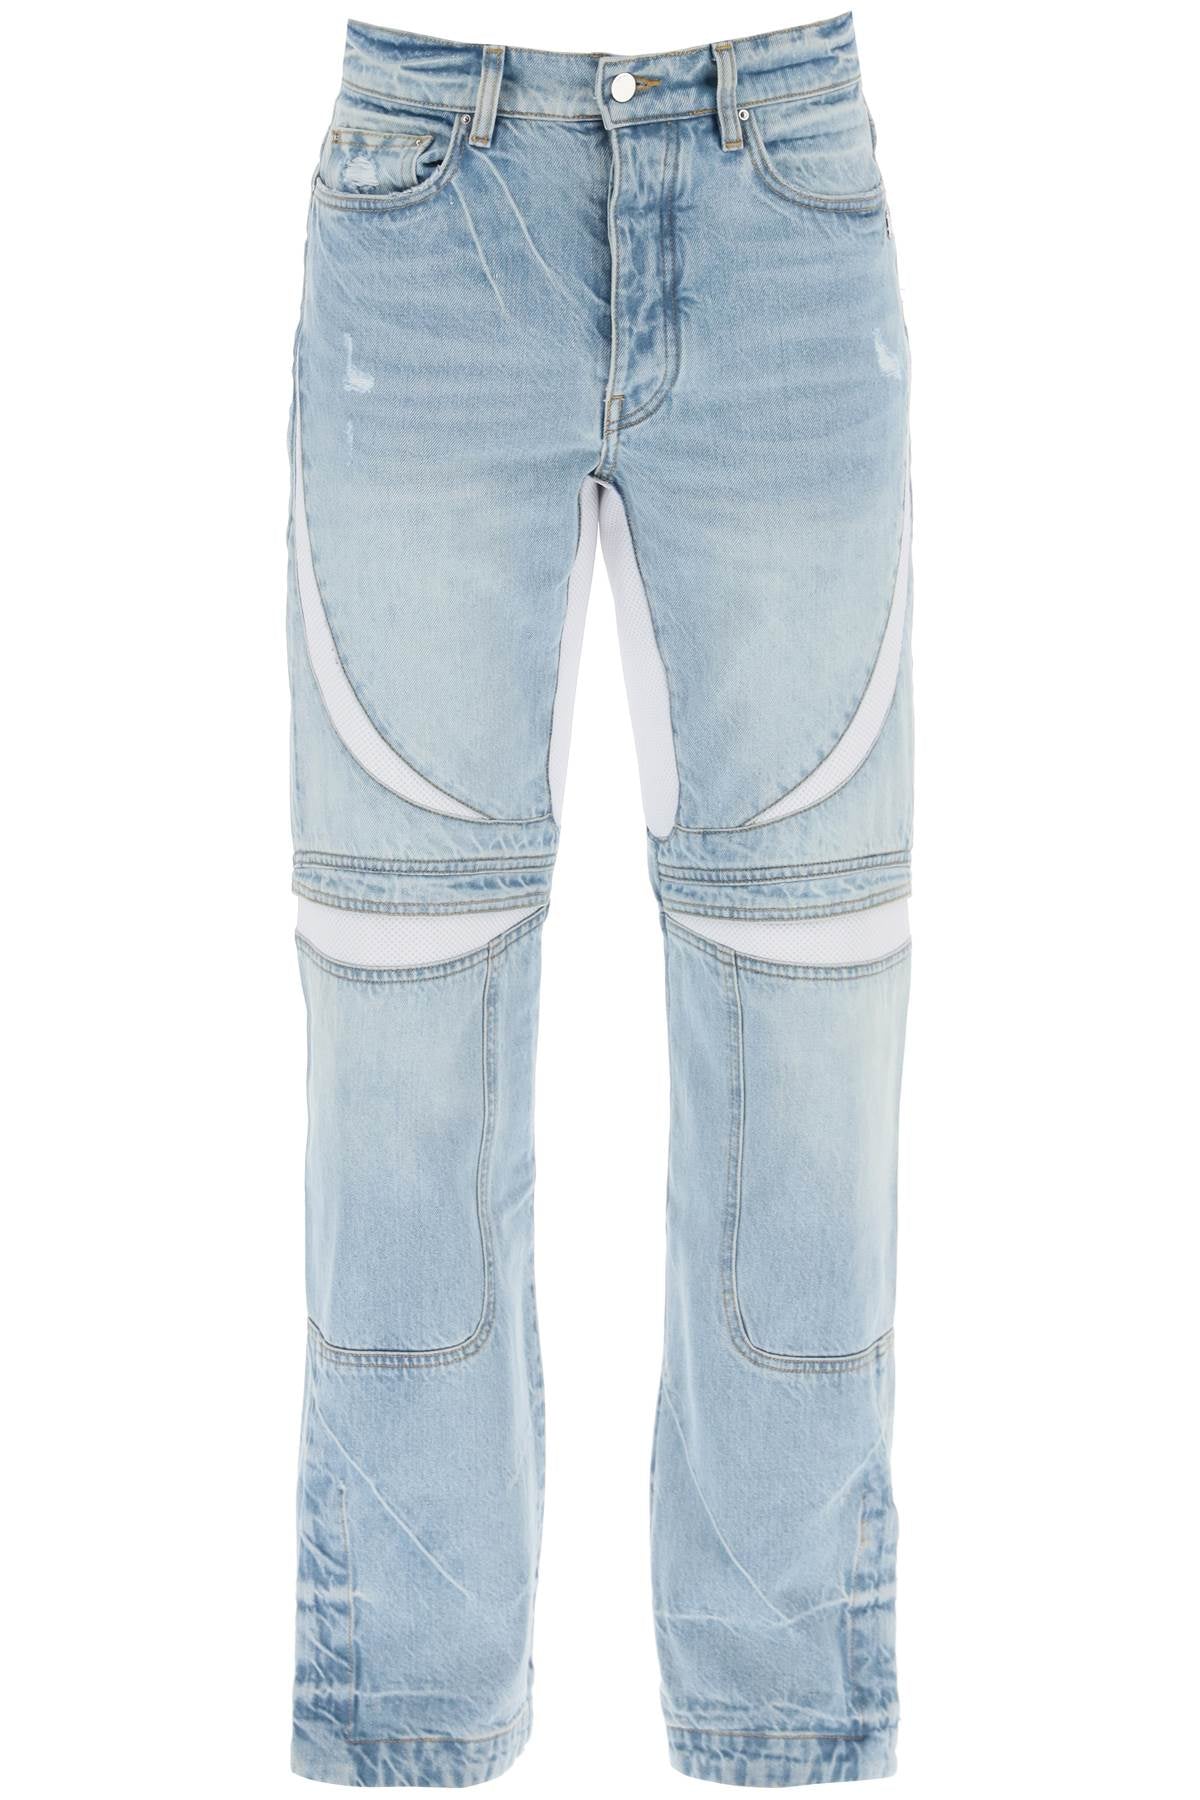 Amiri mx-3 jeans with mesh inserts-0